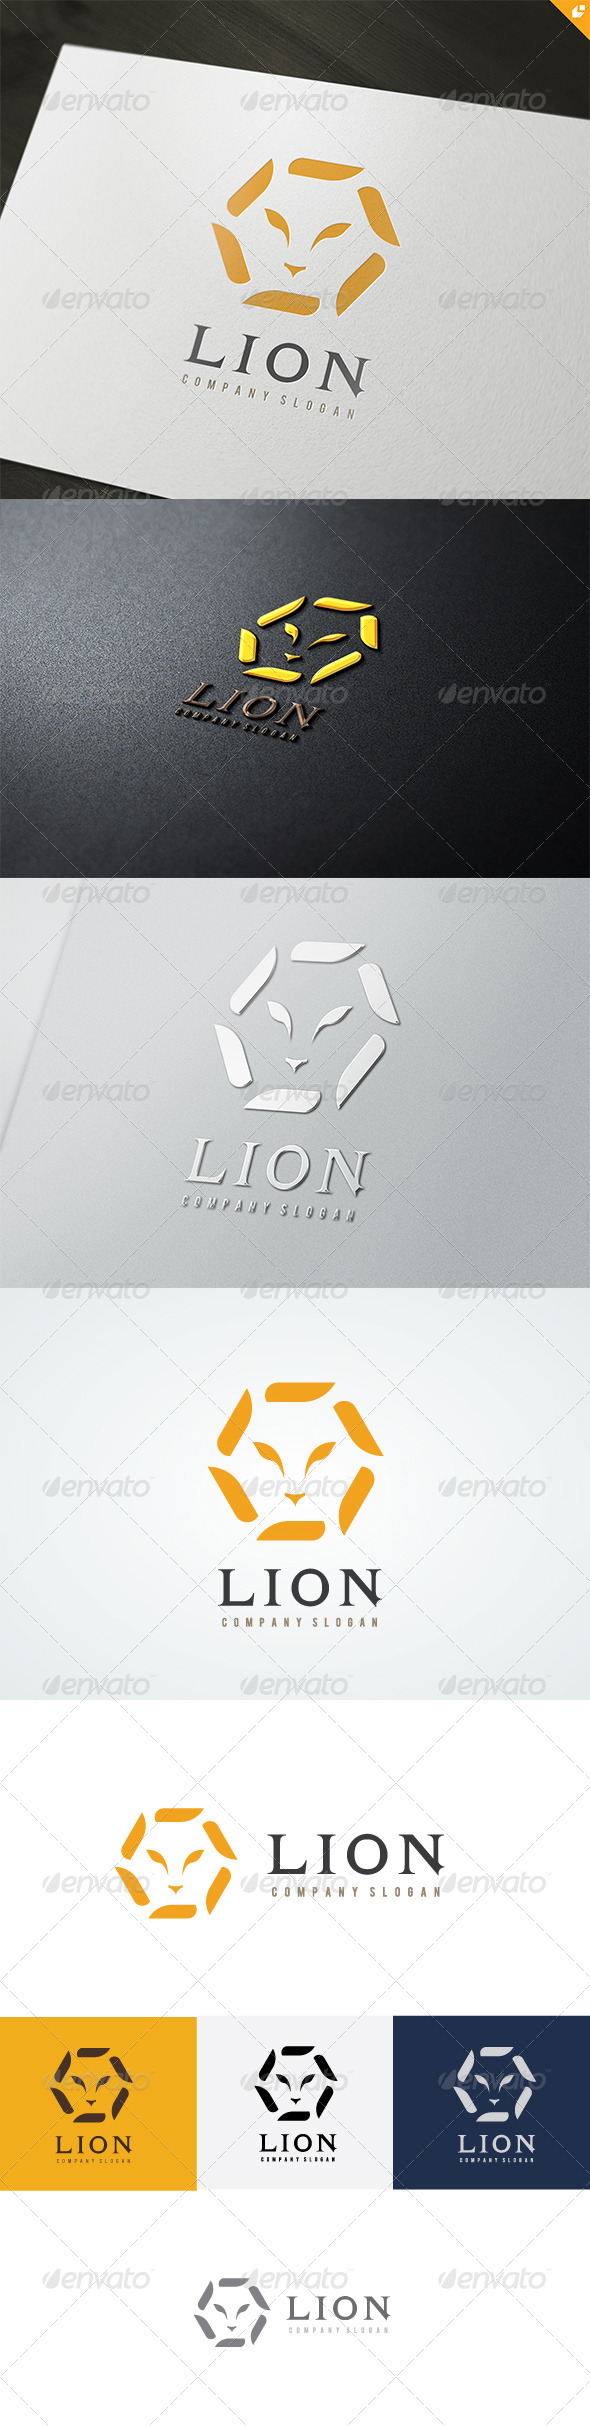 Lion Company Logo